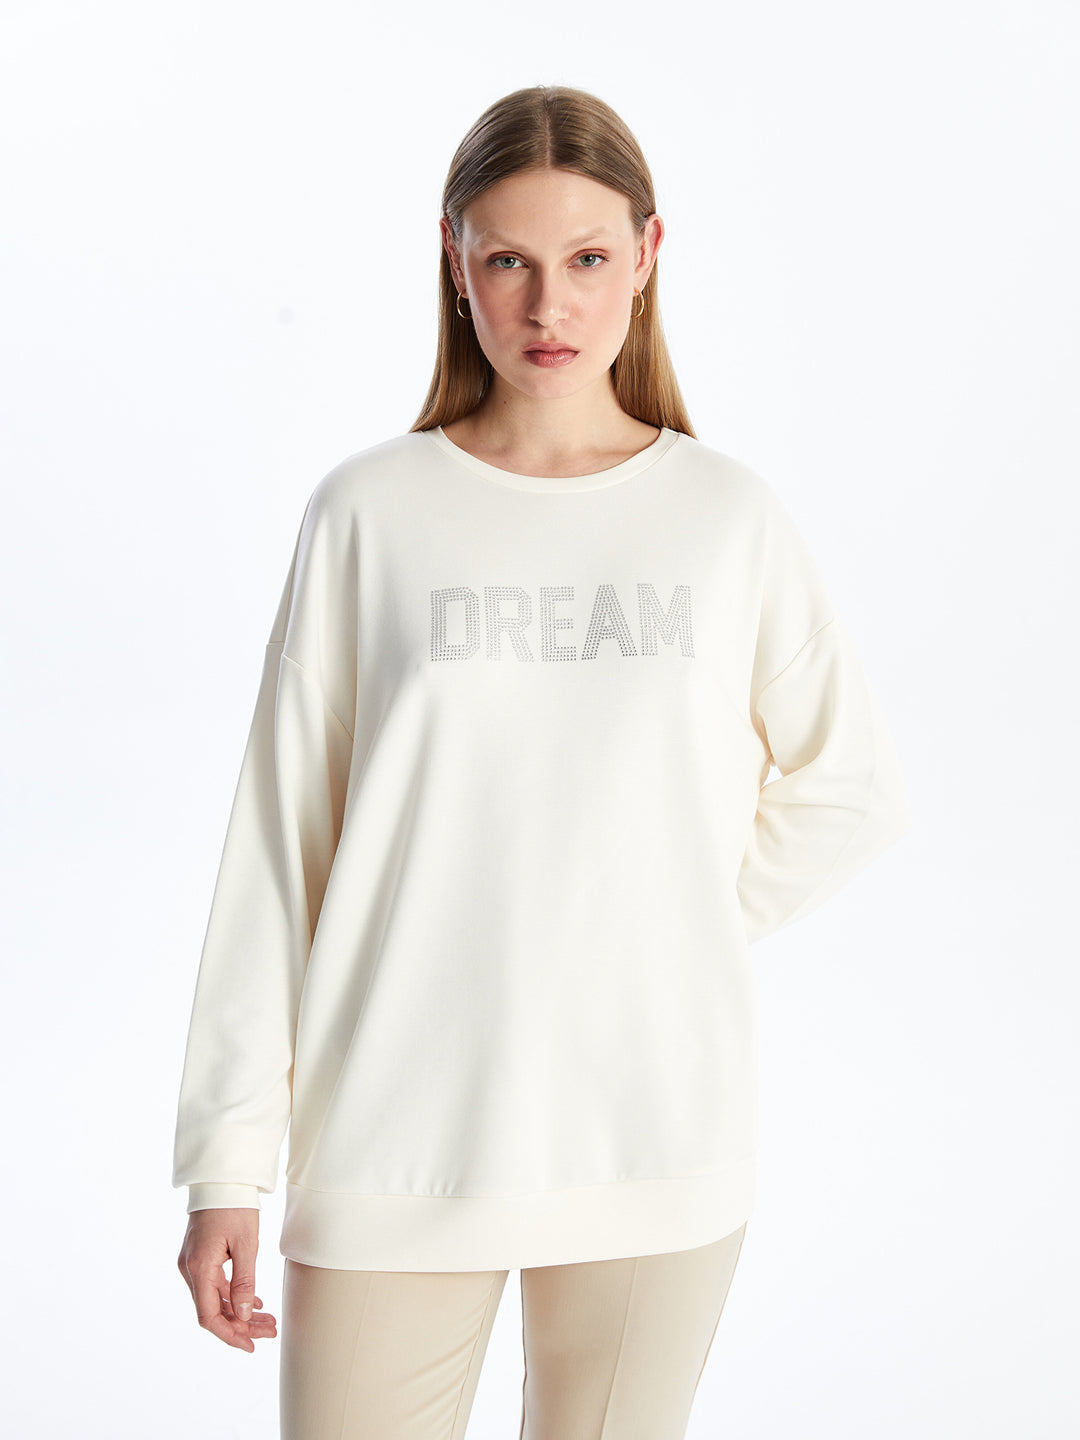 Crew Neck Shiny Stone Printed Women Sweatshirt